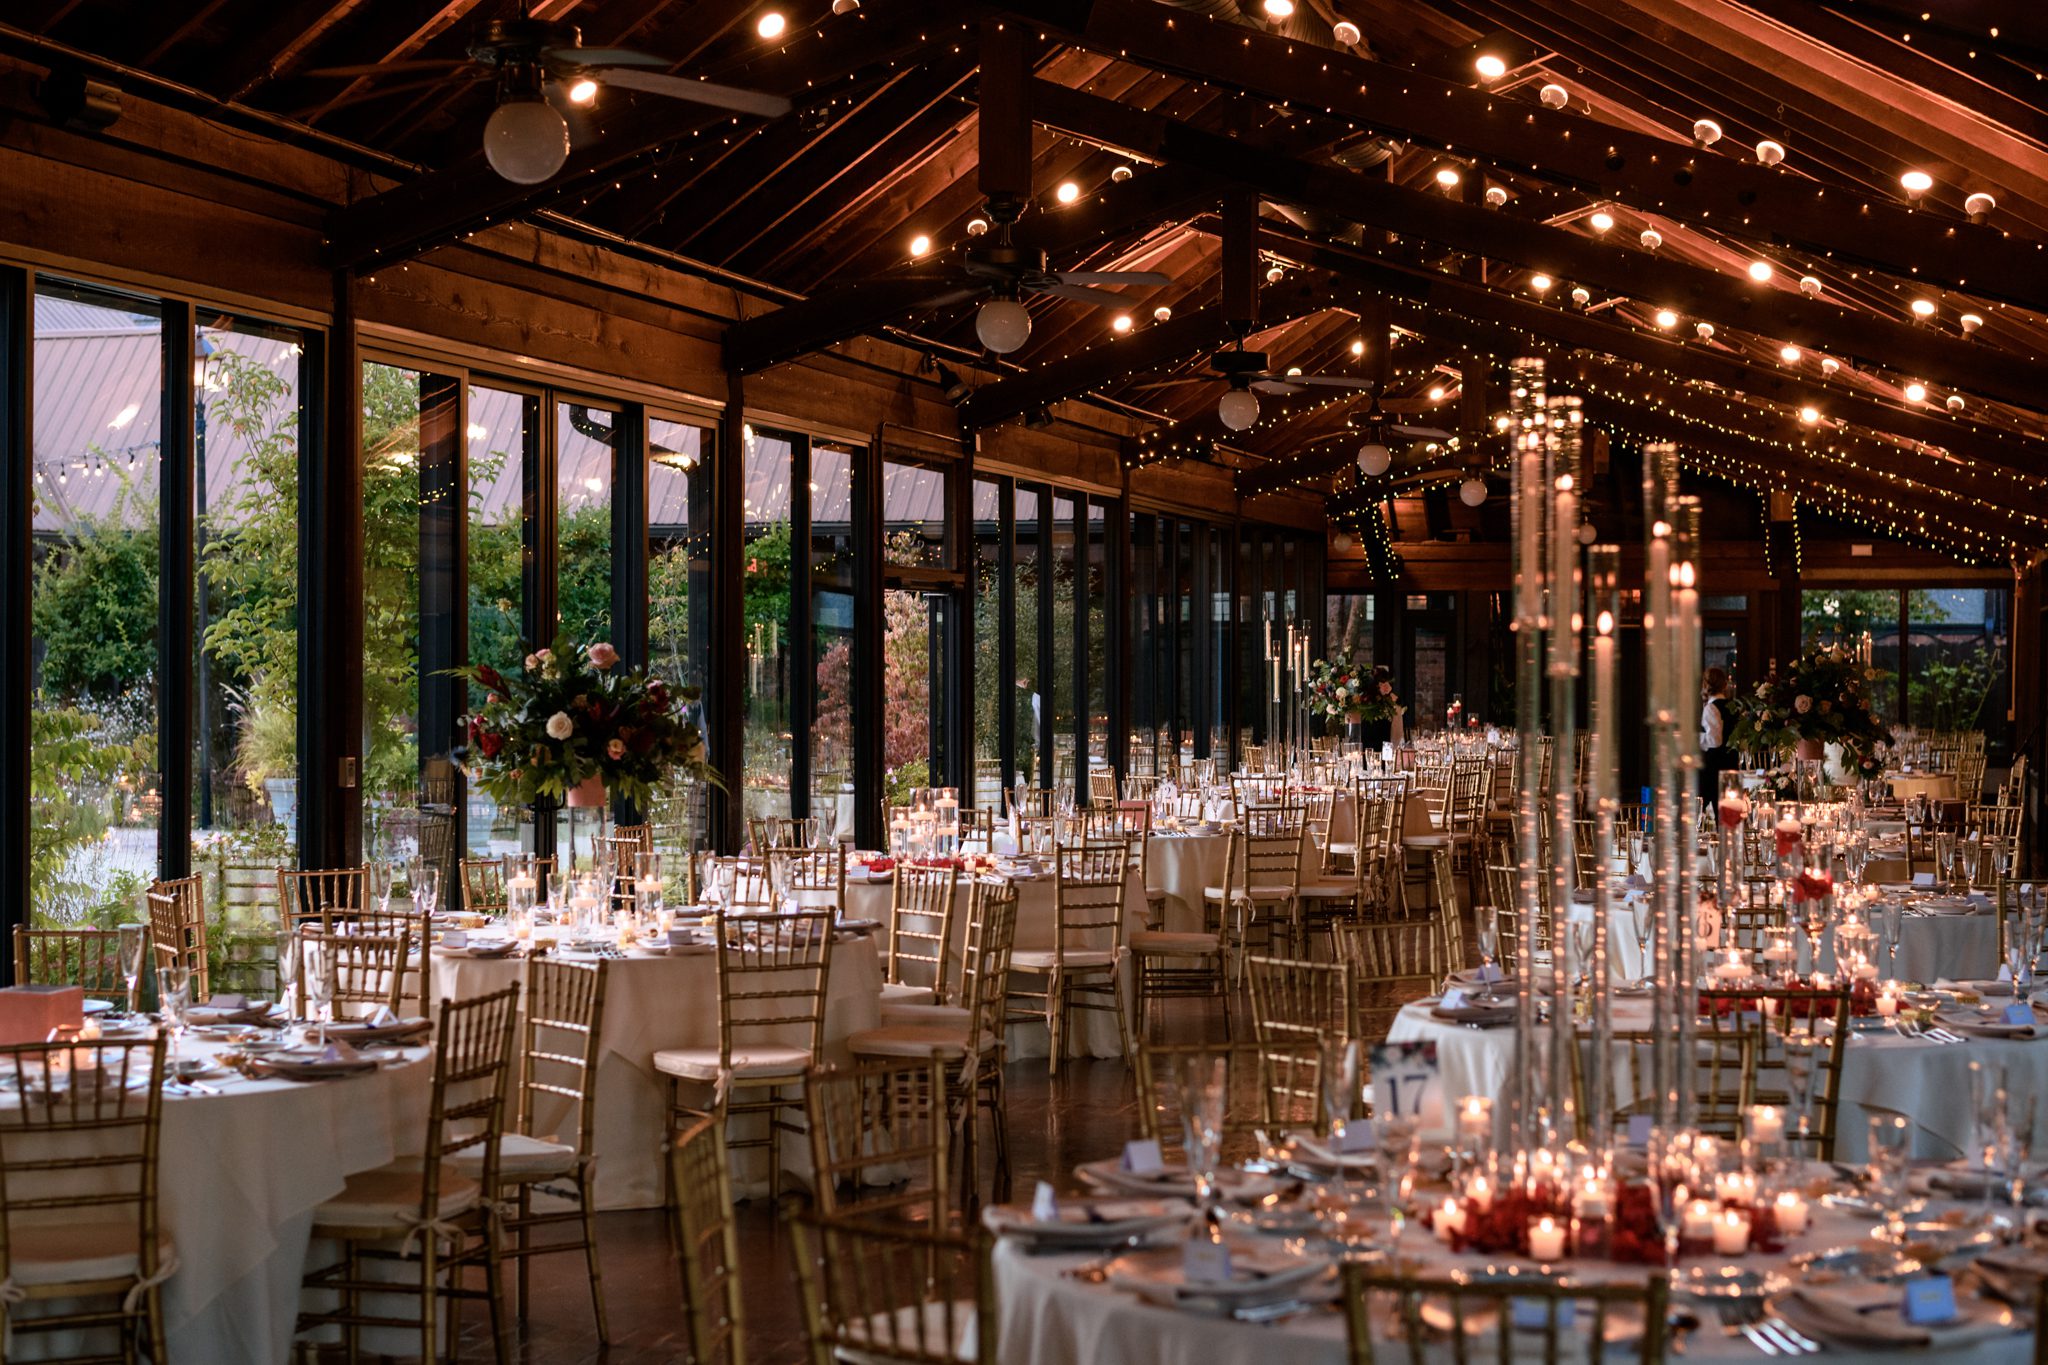 Luxurious interior of Biltmore wedding reception venue in Deerpark, showcasing vintage decor, rich color scheme, and unique architectural features